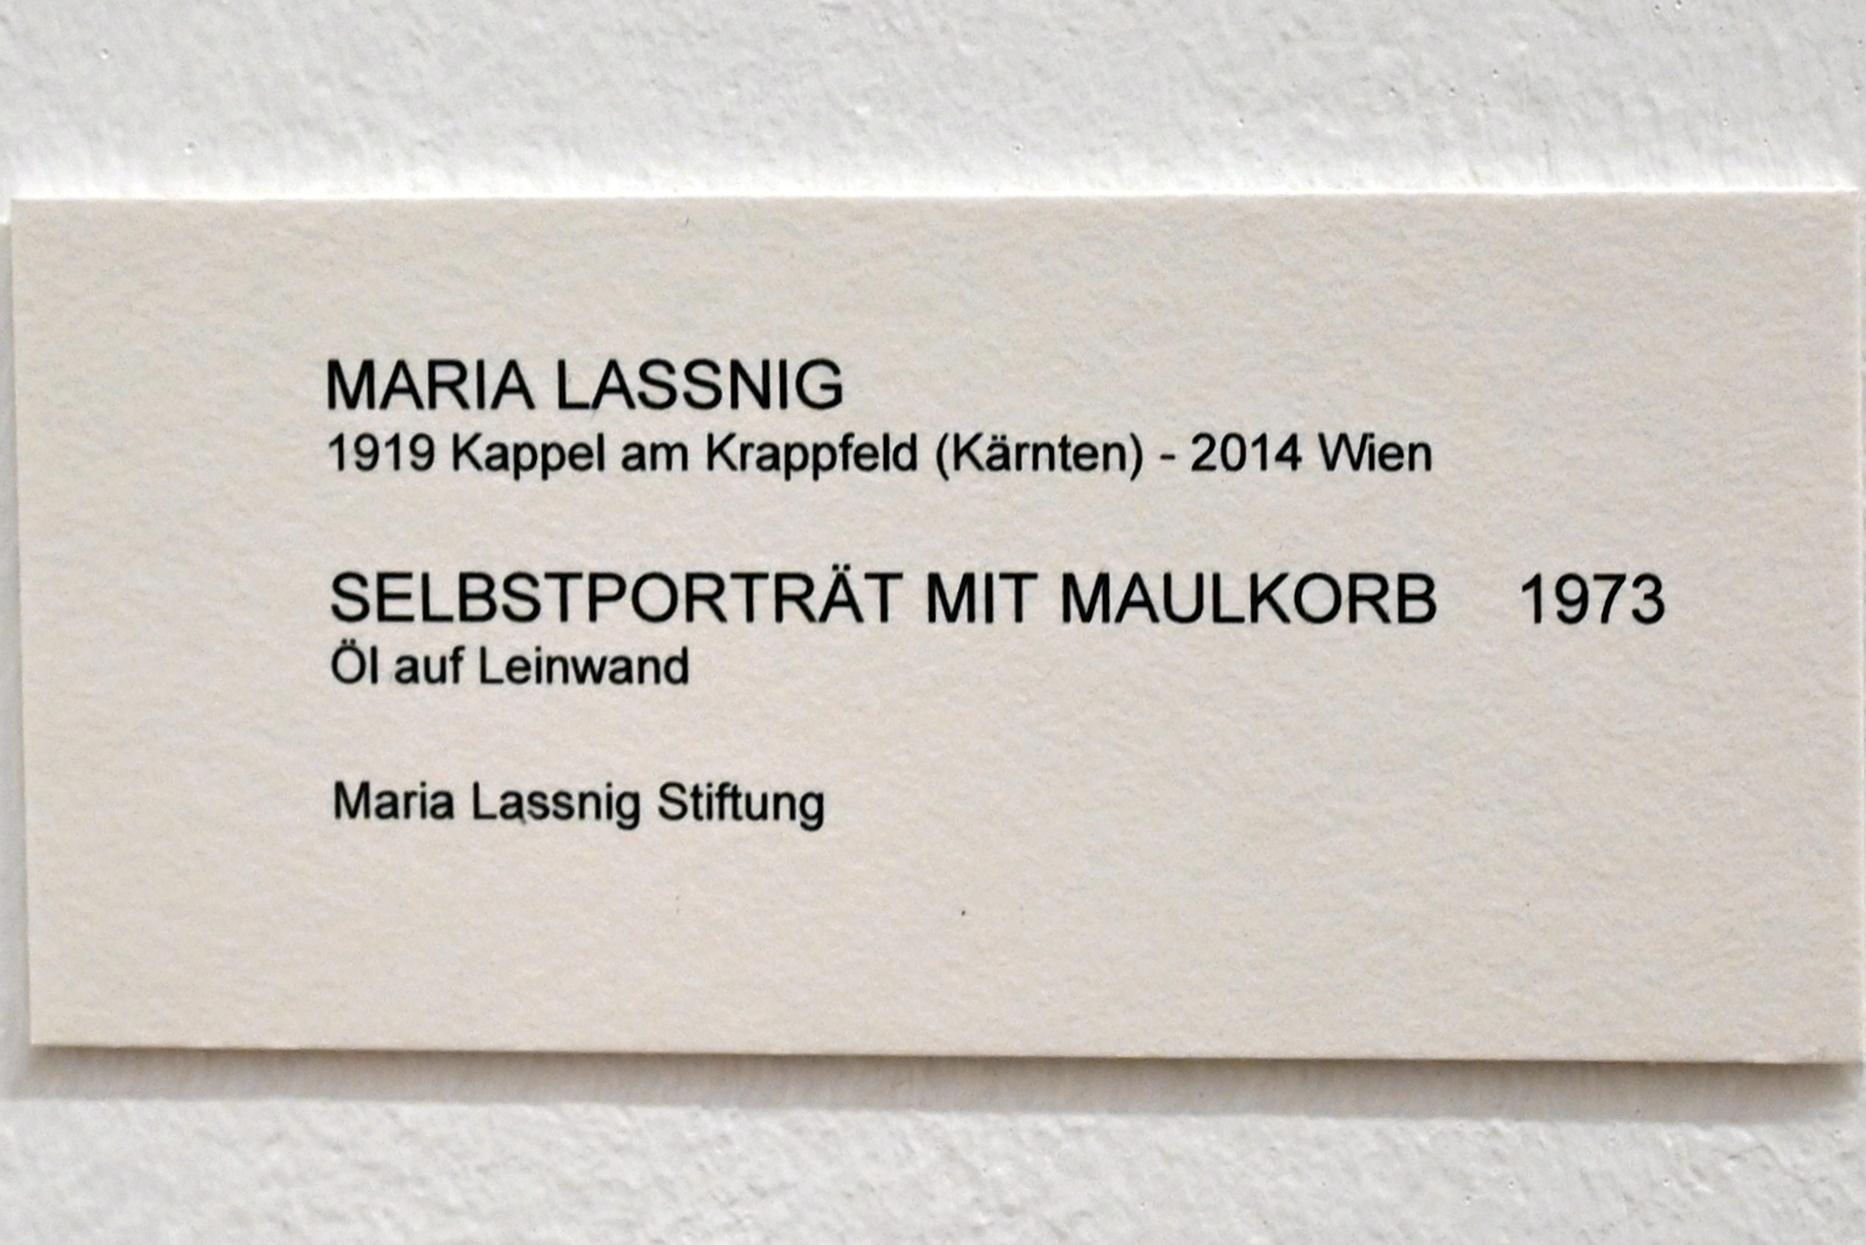 Maria Lassnig (1945–2011), Selbstporträt mit Maulkorb, Bonn, Kunstmuseum, Ausstellung "Maria Lassnig - Wach bleiben" vom 10.02. - 08.05.2022, Saal 1, 1973, Bild 2/2